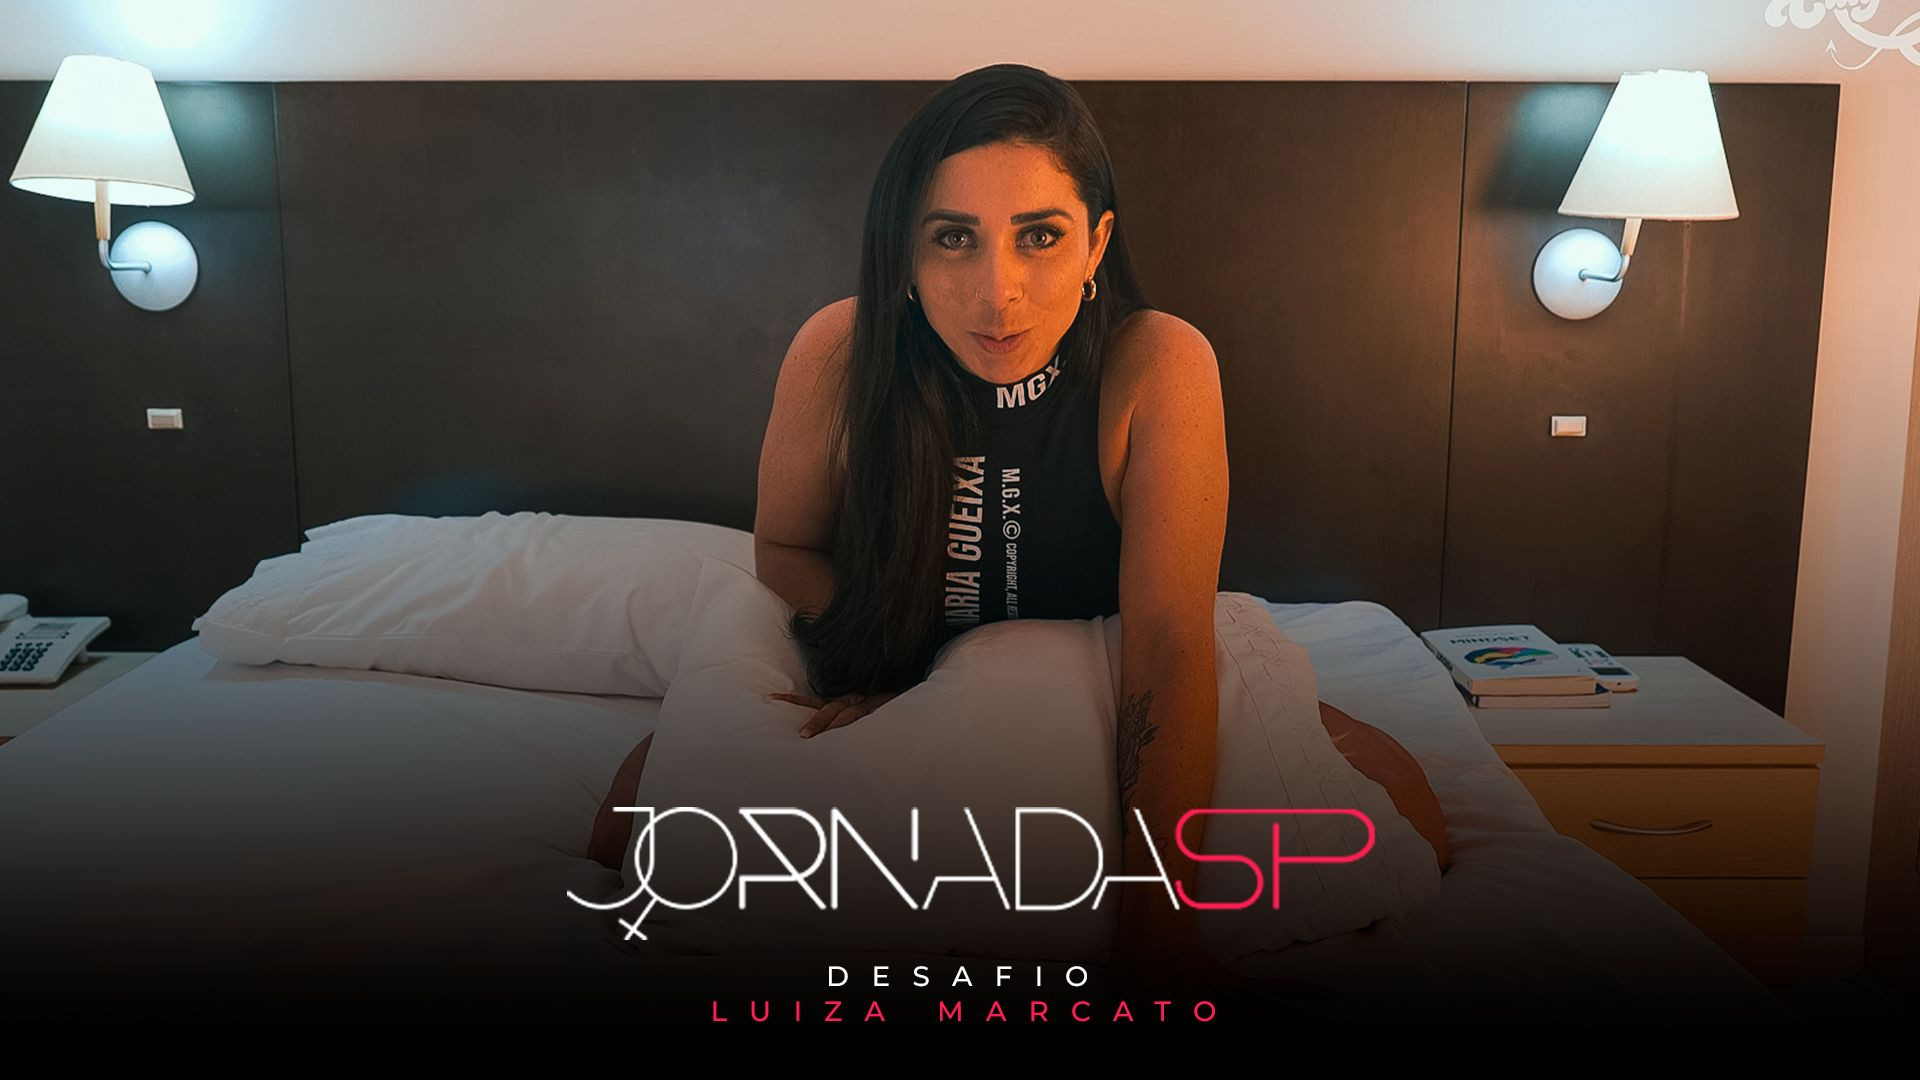 ⁣Jornada SP EP.06 - Desafio Luiza Marcato